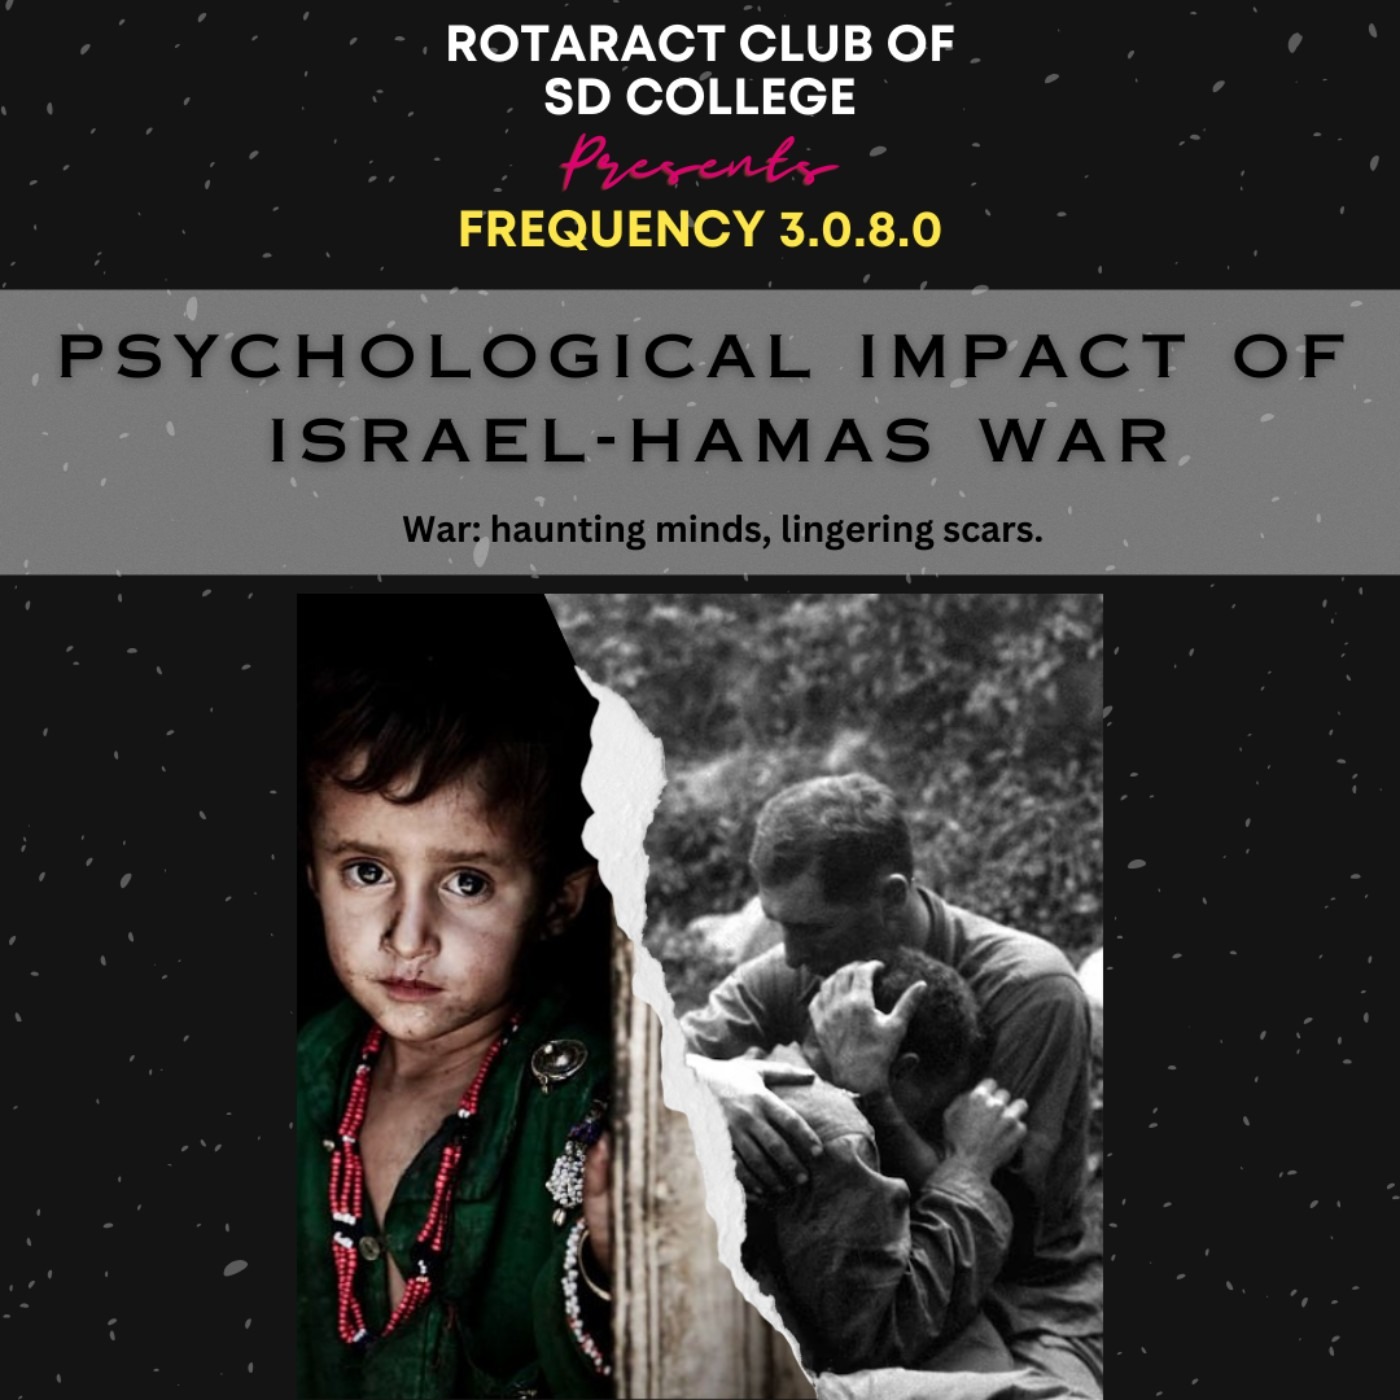 PSYCHOLOGICAL IMPACT OF ISRAEL - HAMAS WAR